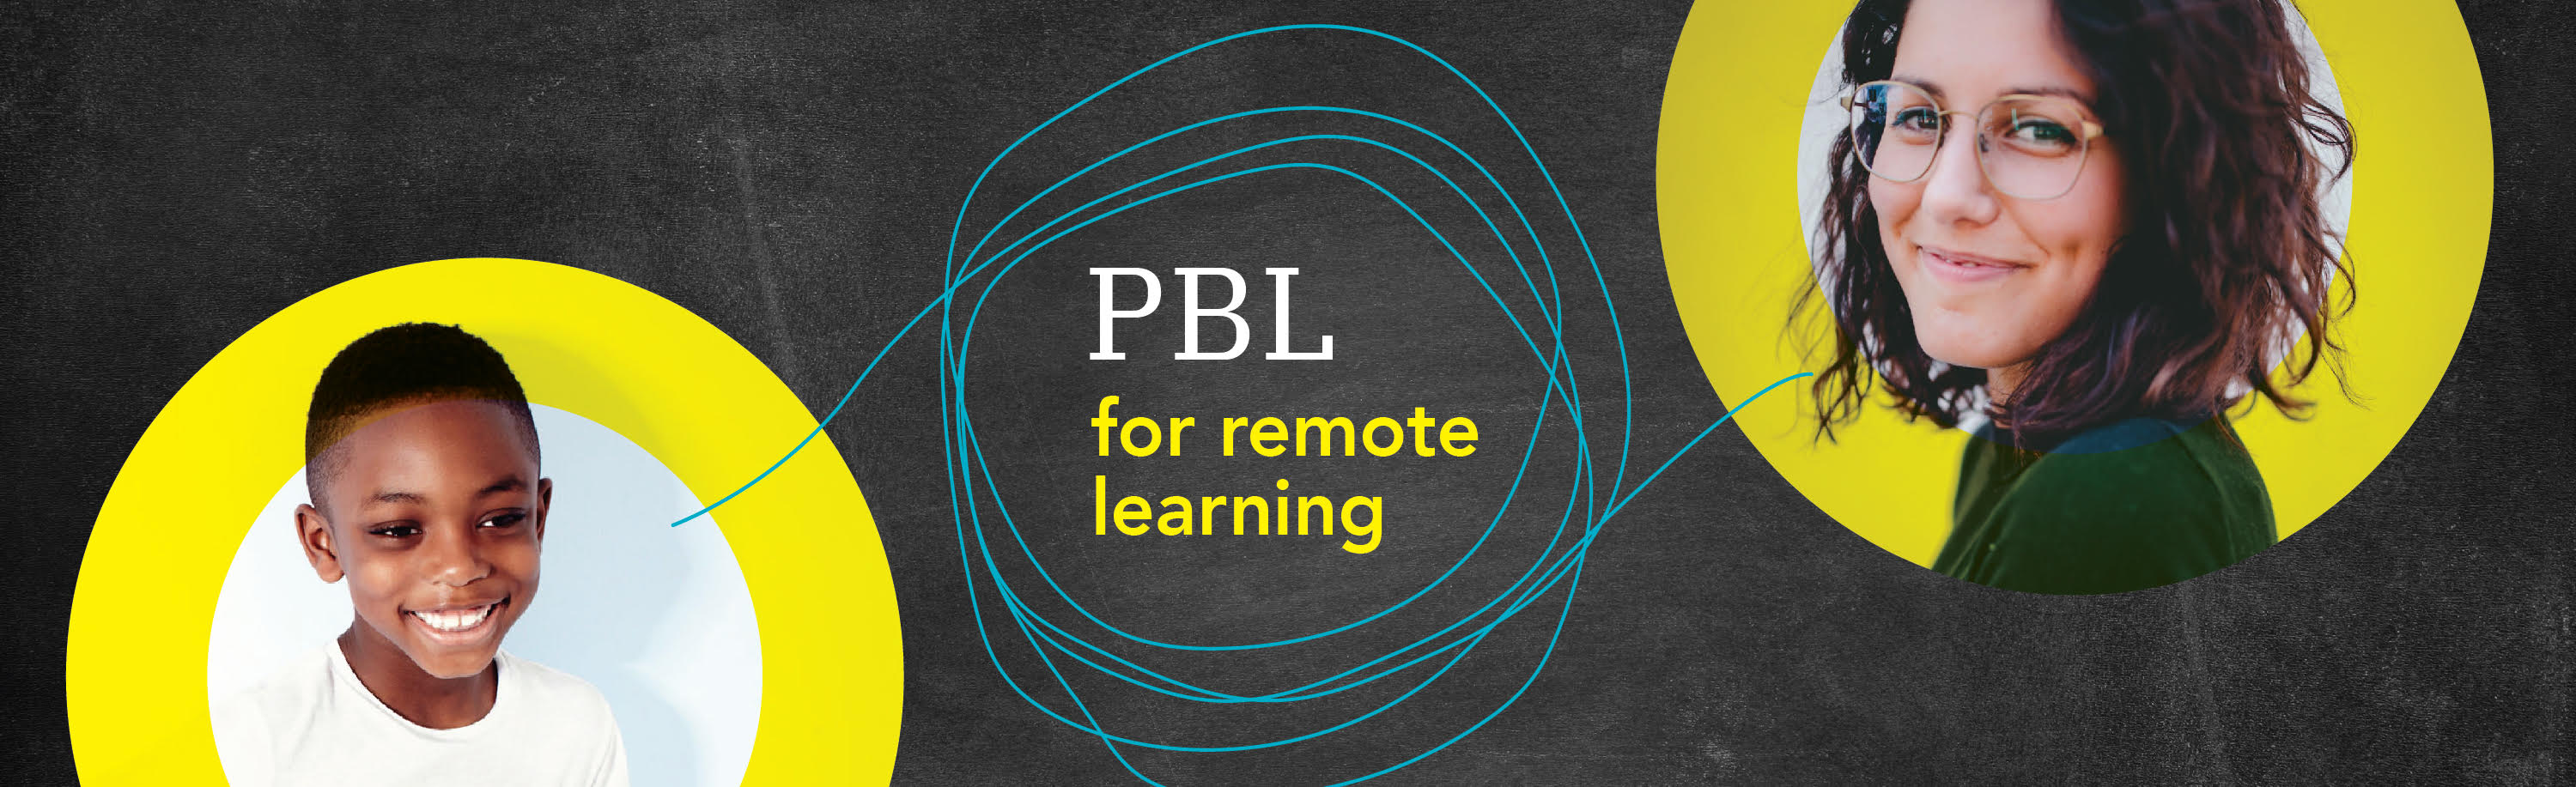 PBL Remote Microsite Banner